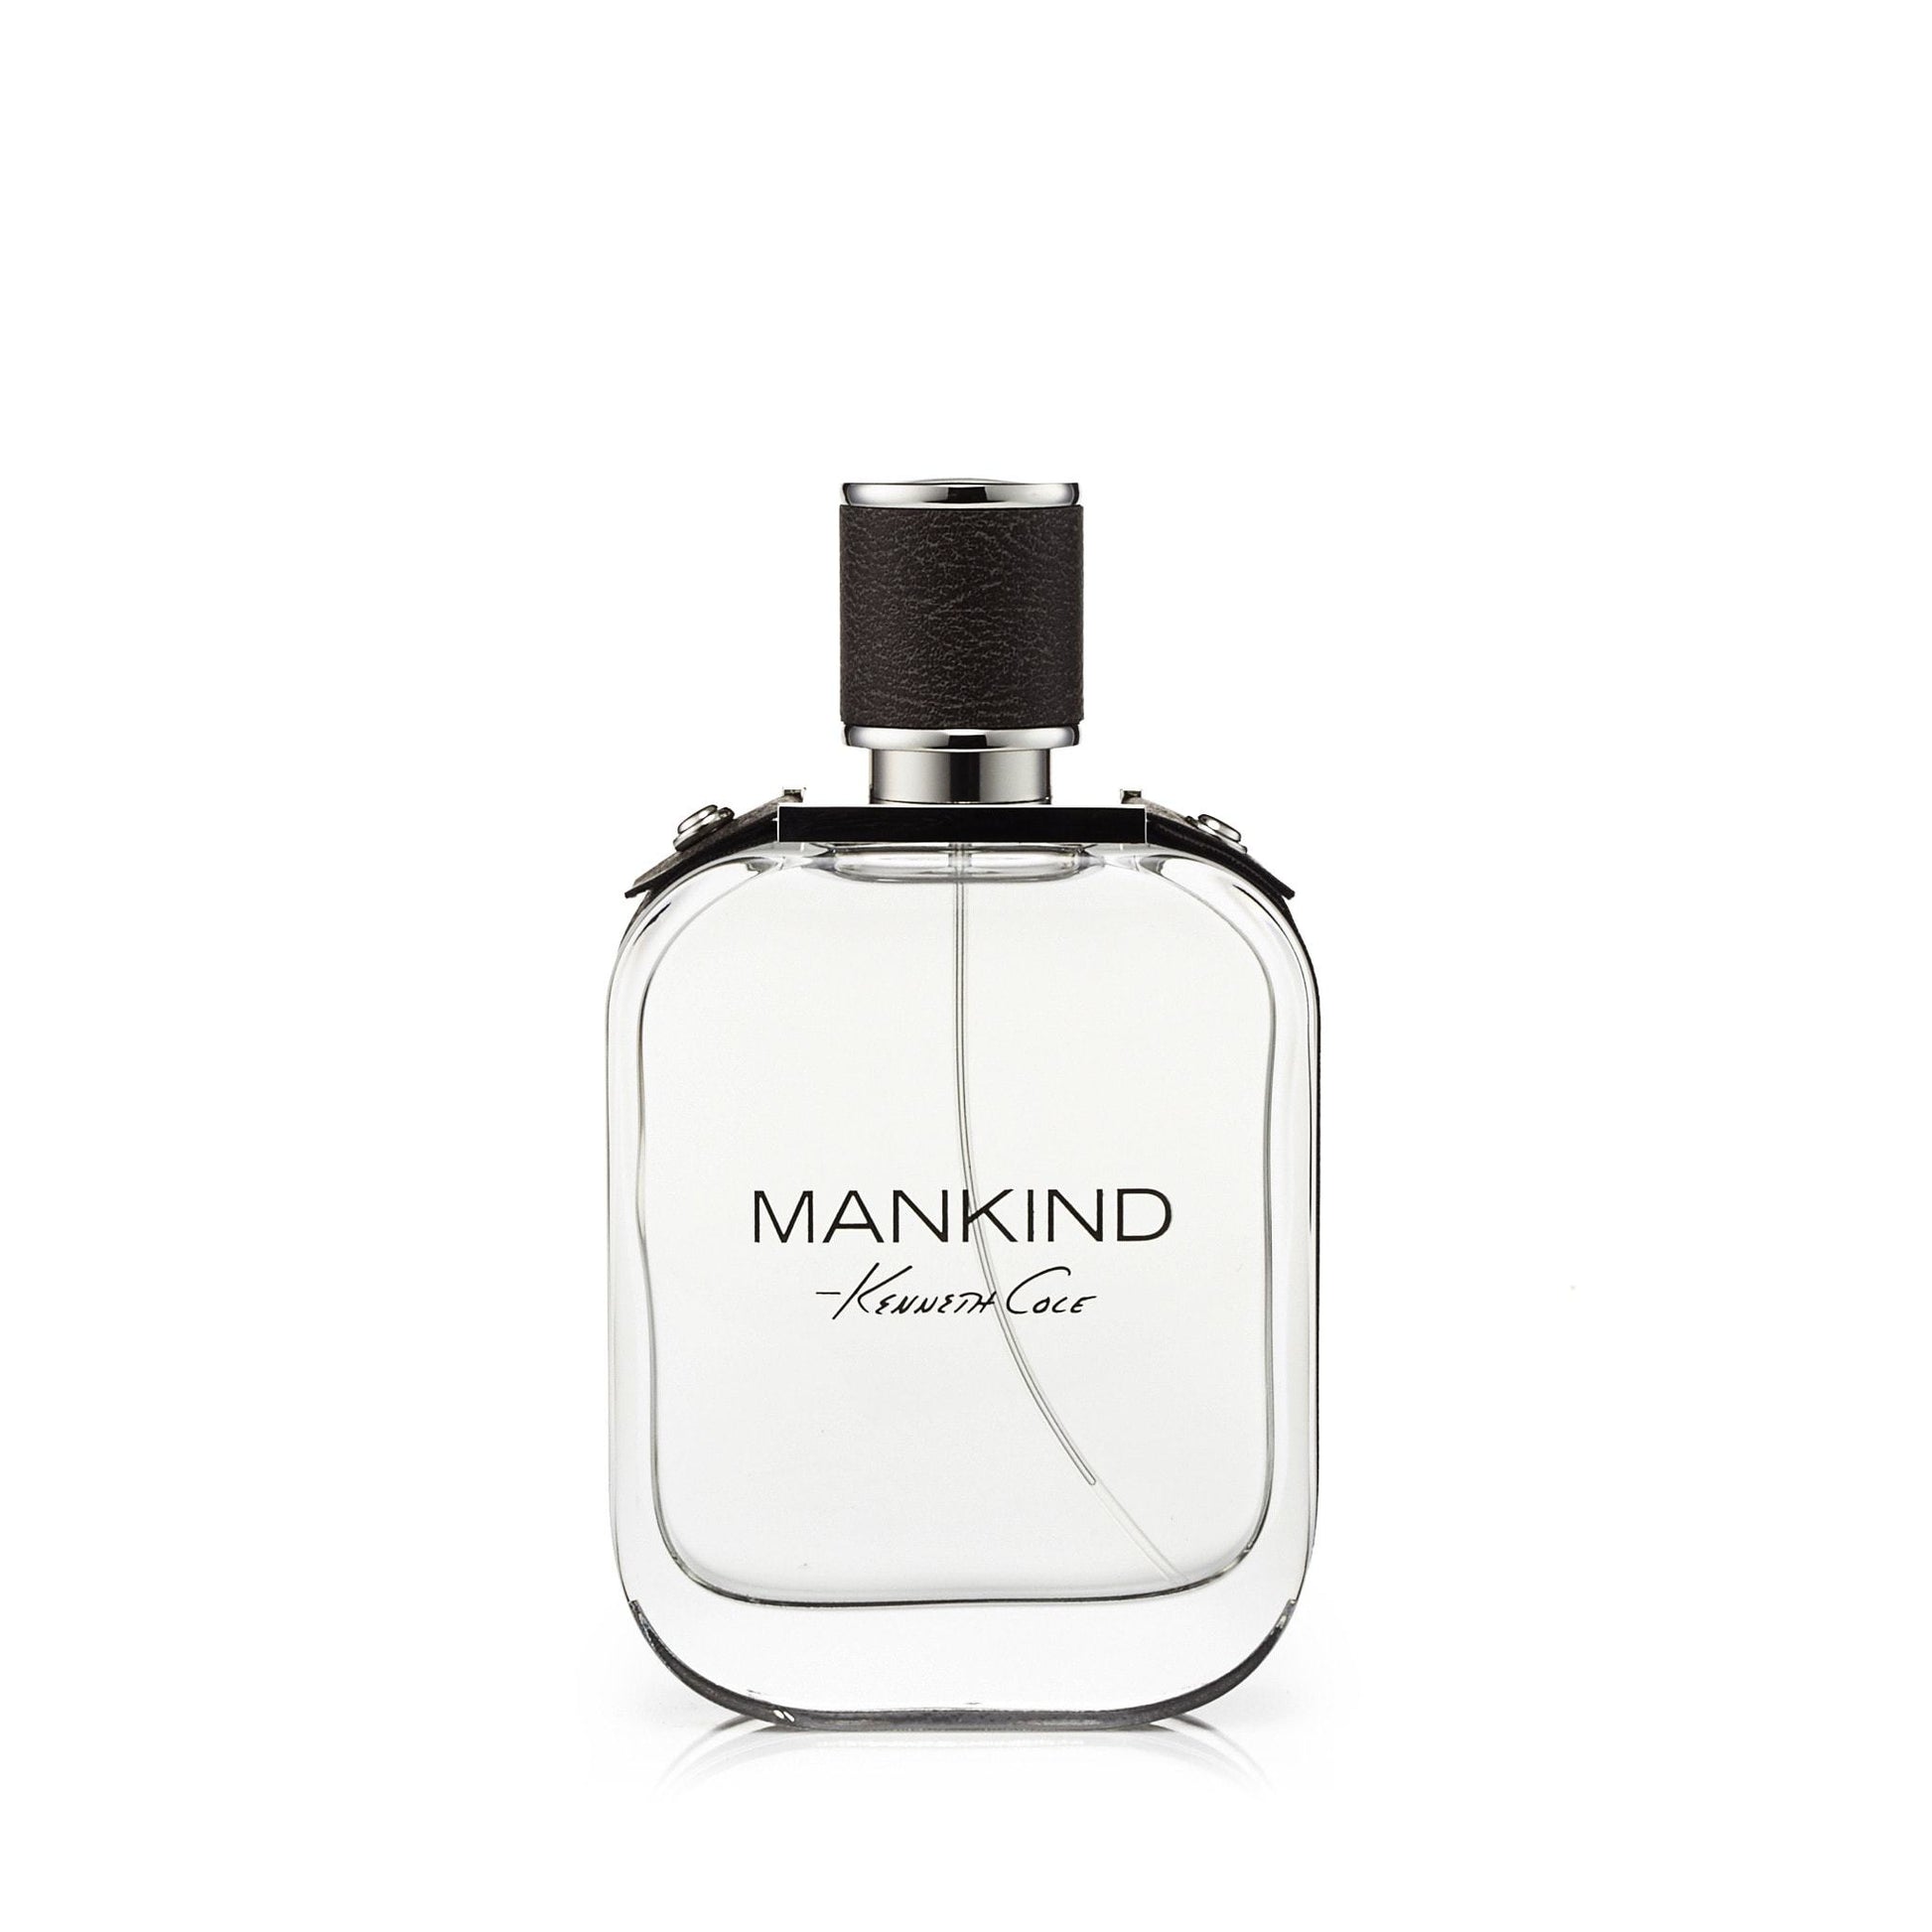 Mankind Eau de Toilette Spray for Men by Kenneth Cole, Product image 2